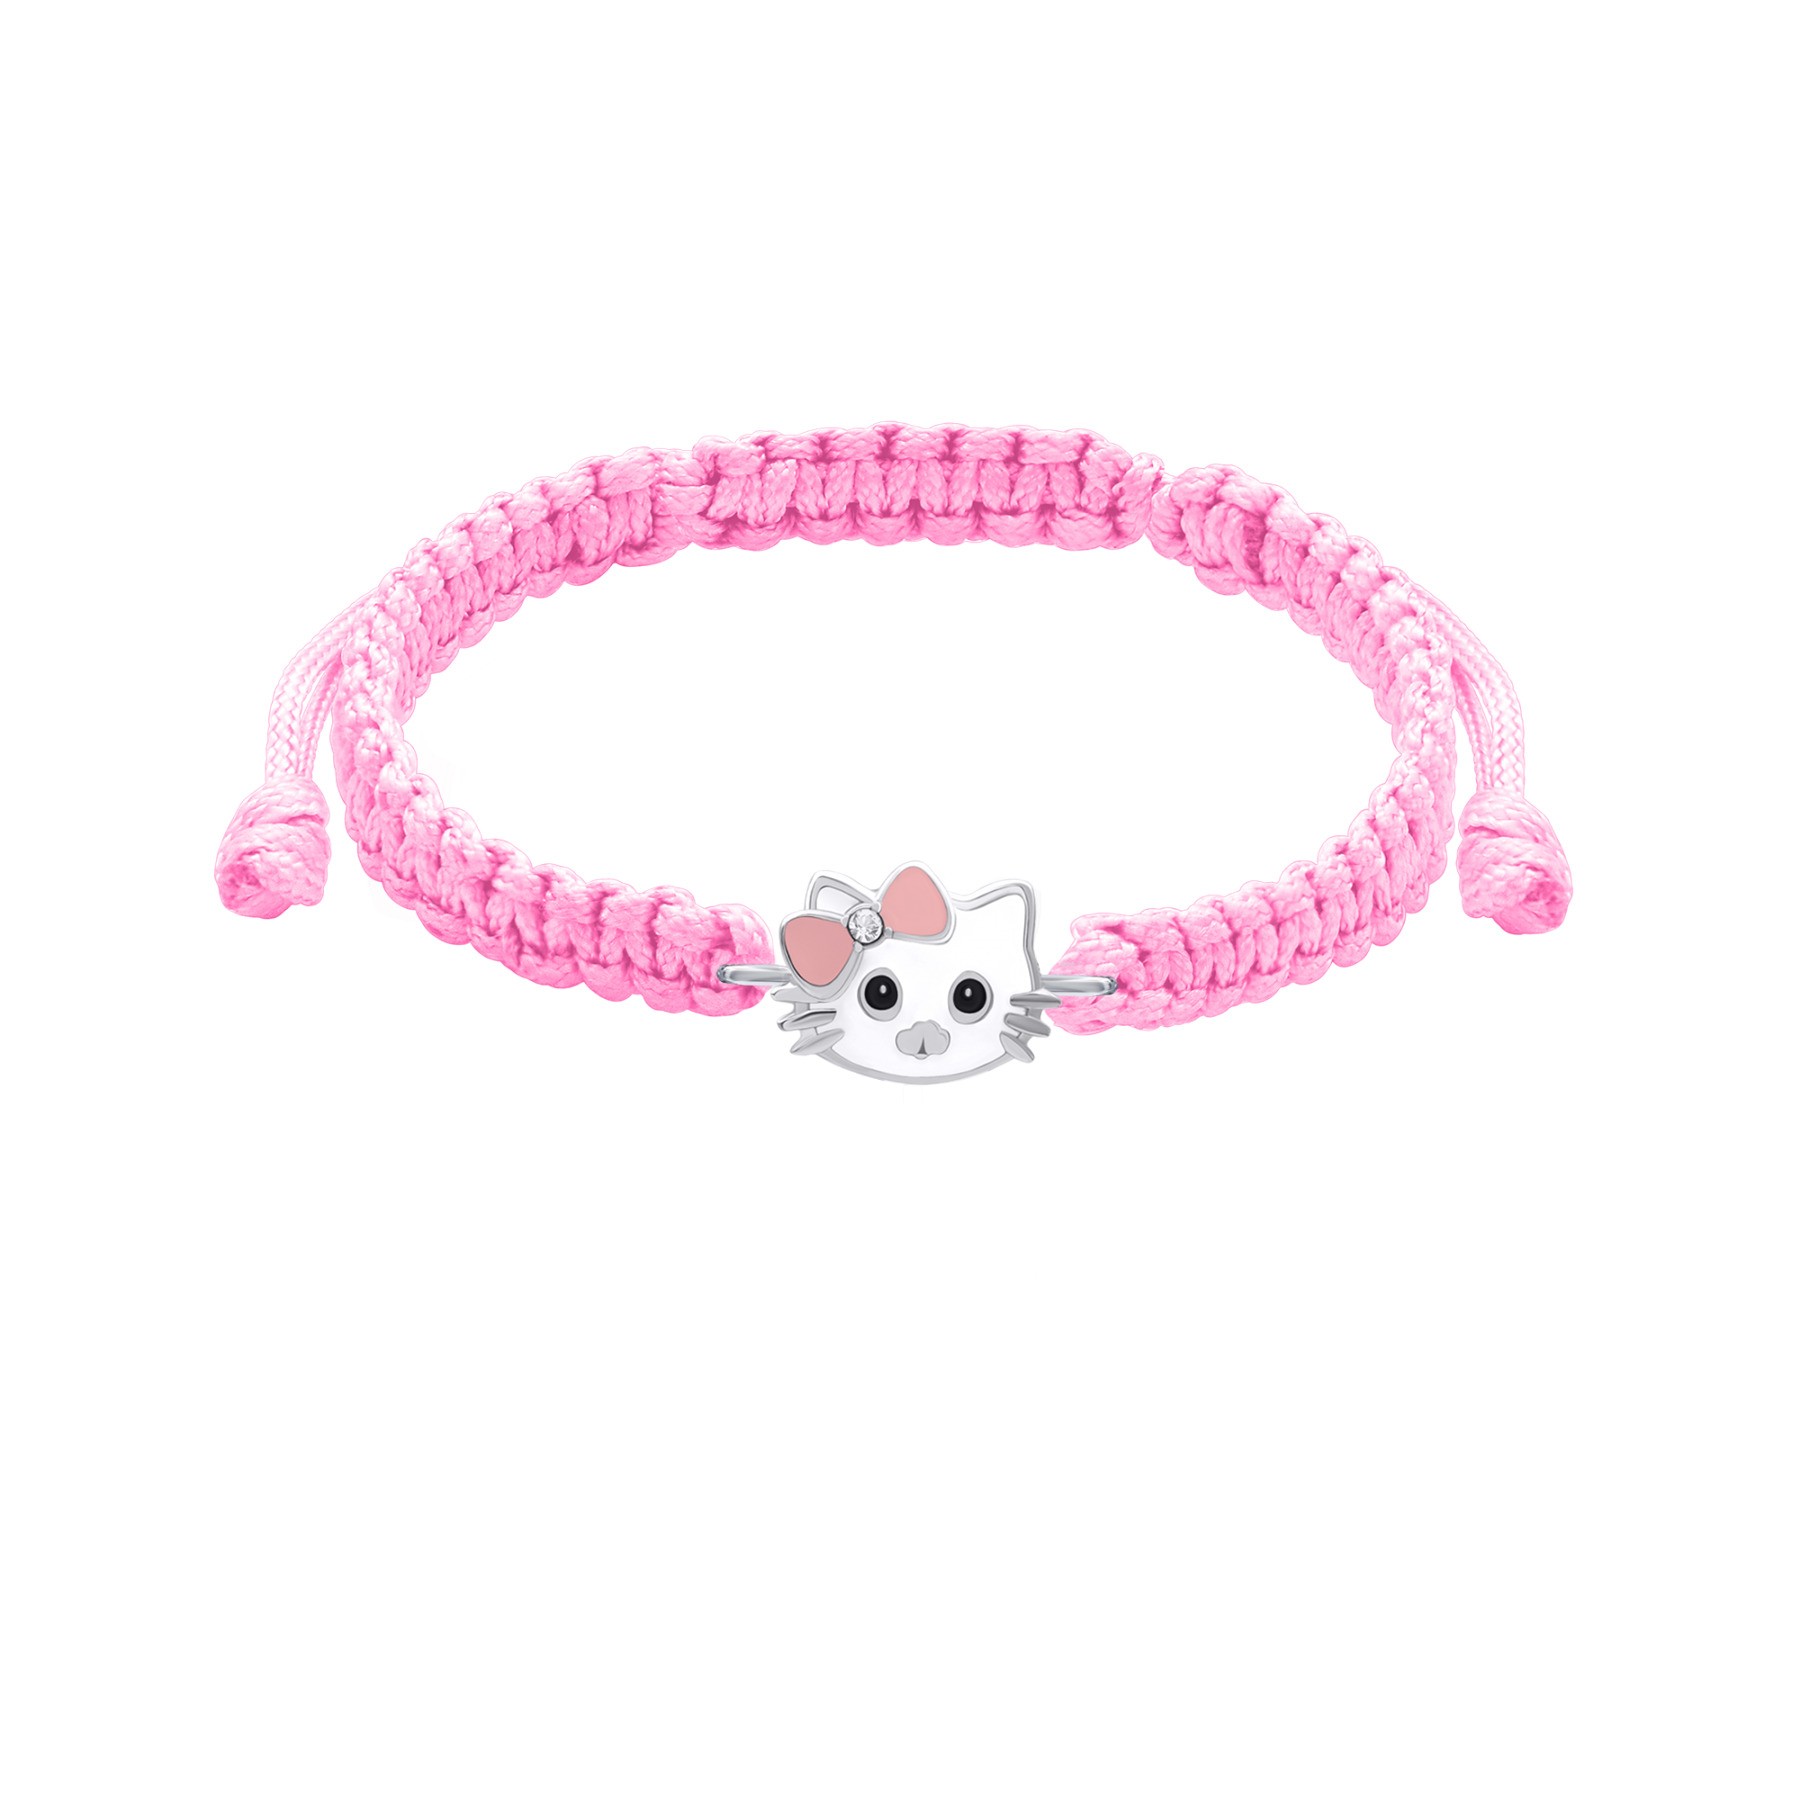 Braided bracelet Kitty-cat